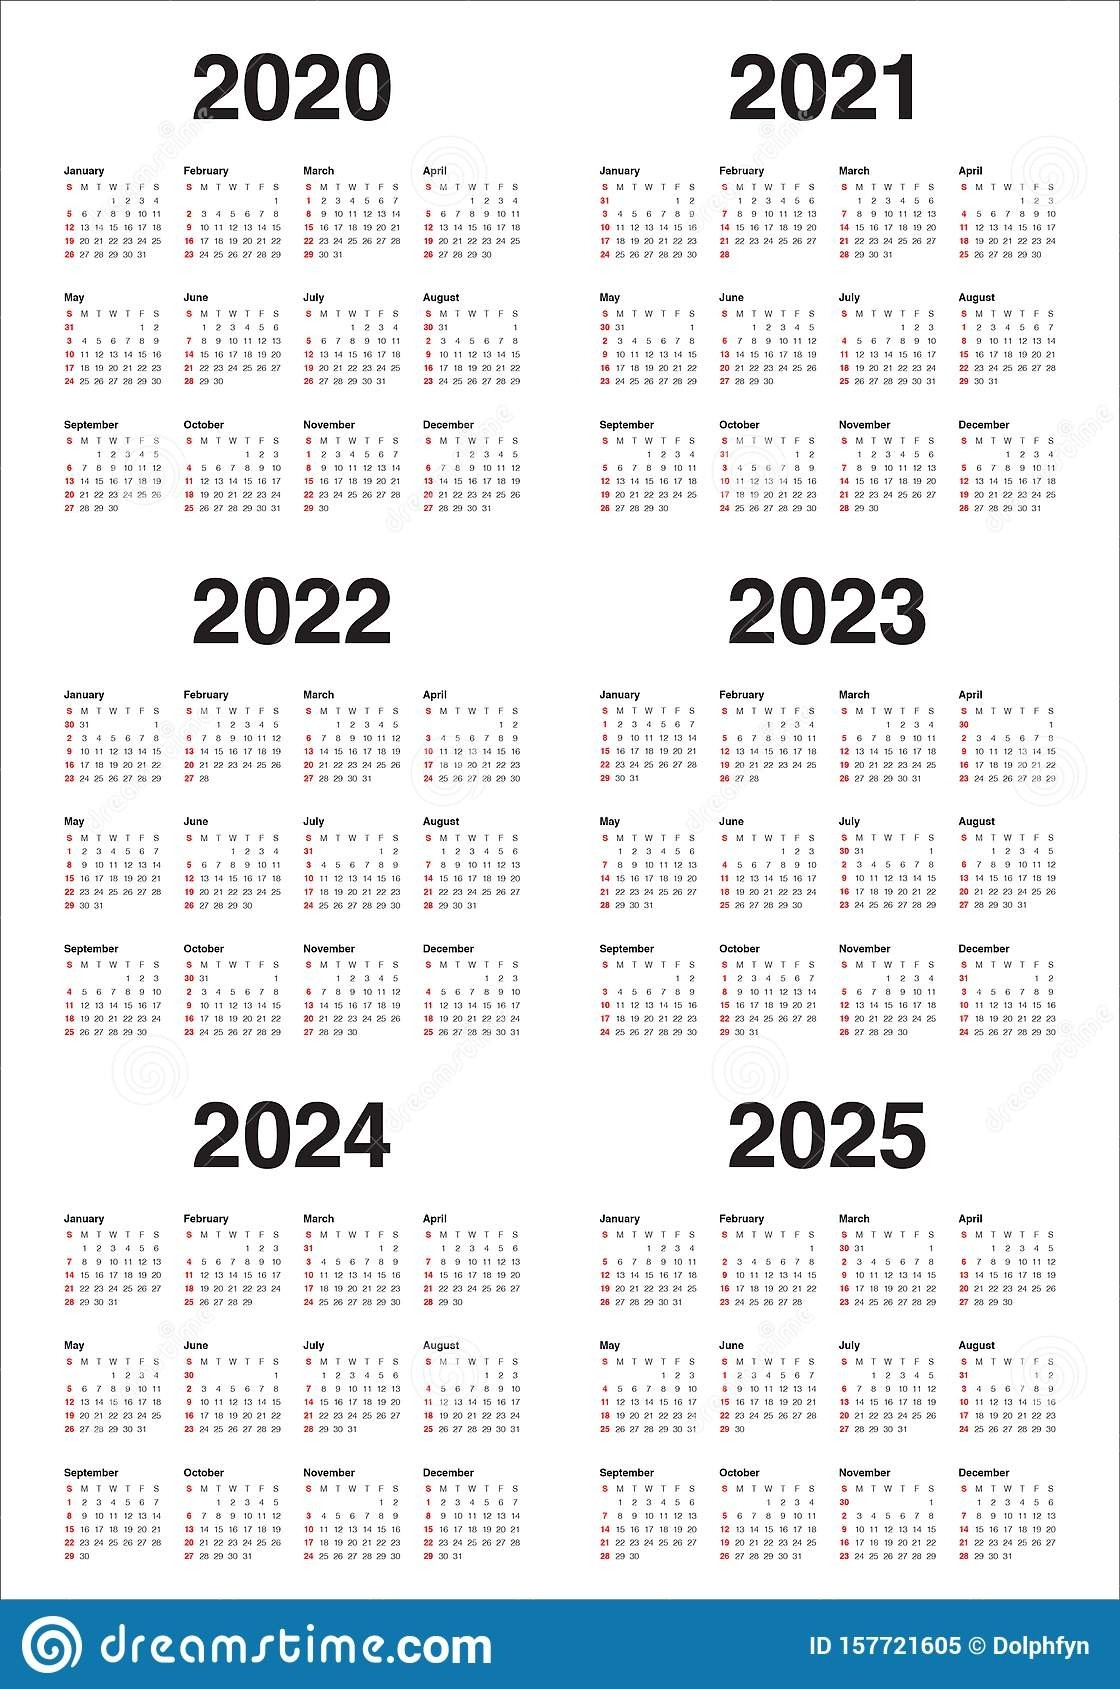 Printable 3 Year Calendars 2021 2022 2023 | Ten Free  Free Printable Calendar 2022 And 2023